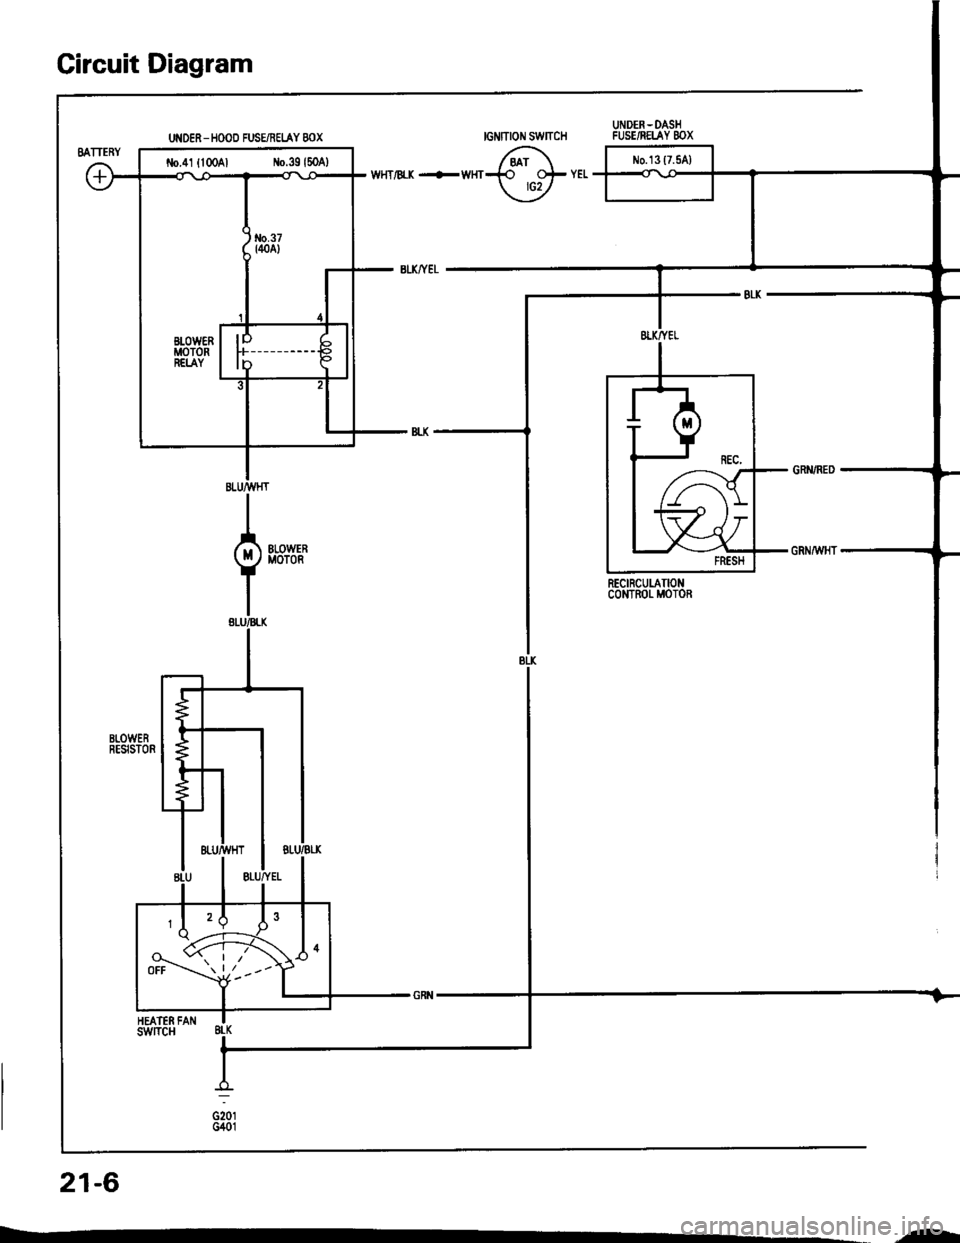 HONDA INTEGRA 1994 4.G Owners Guide UNOER - HOOO FUSE/REI.AY 8OX
Circuit Diagram
WtlT/BtK.+WtfT
UiIDEN - OASHFUSE/RETAY 8OX
RECIRCUI.ATIONcoMTBor- Moron
nrotG401
N0.13 (7.5A1
21-6
-] 